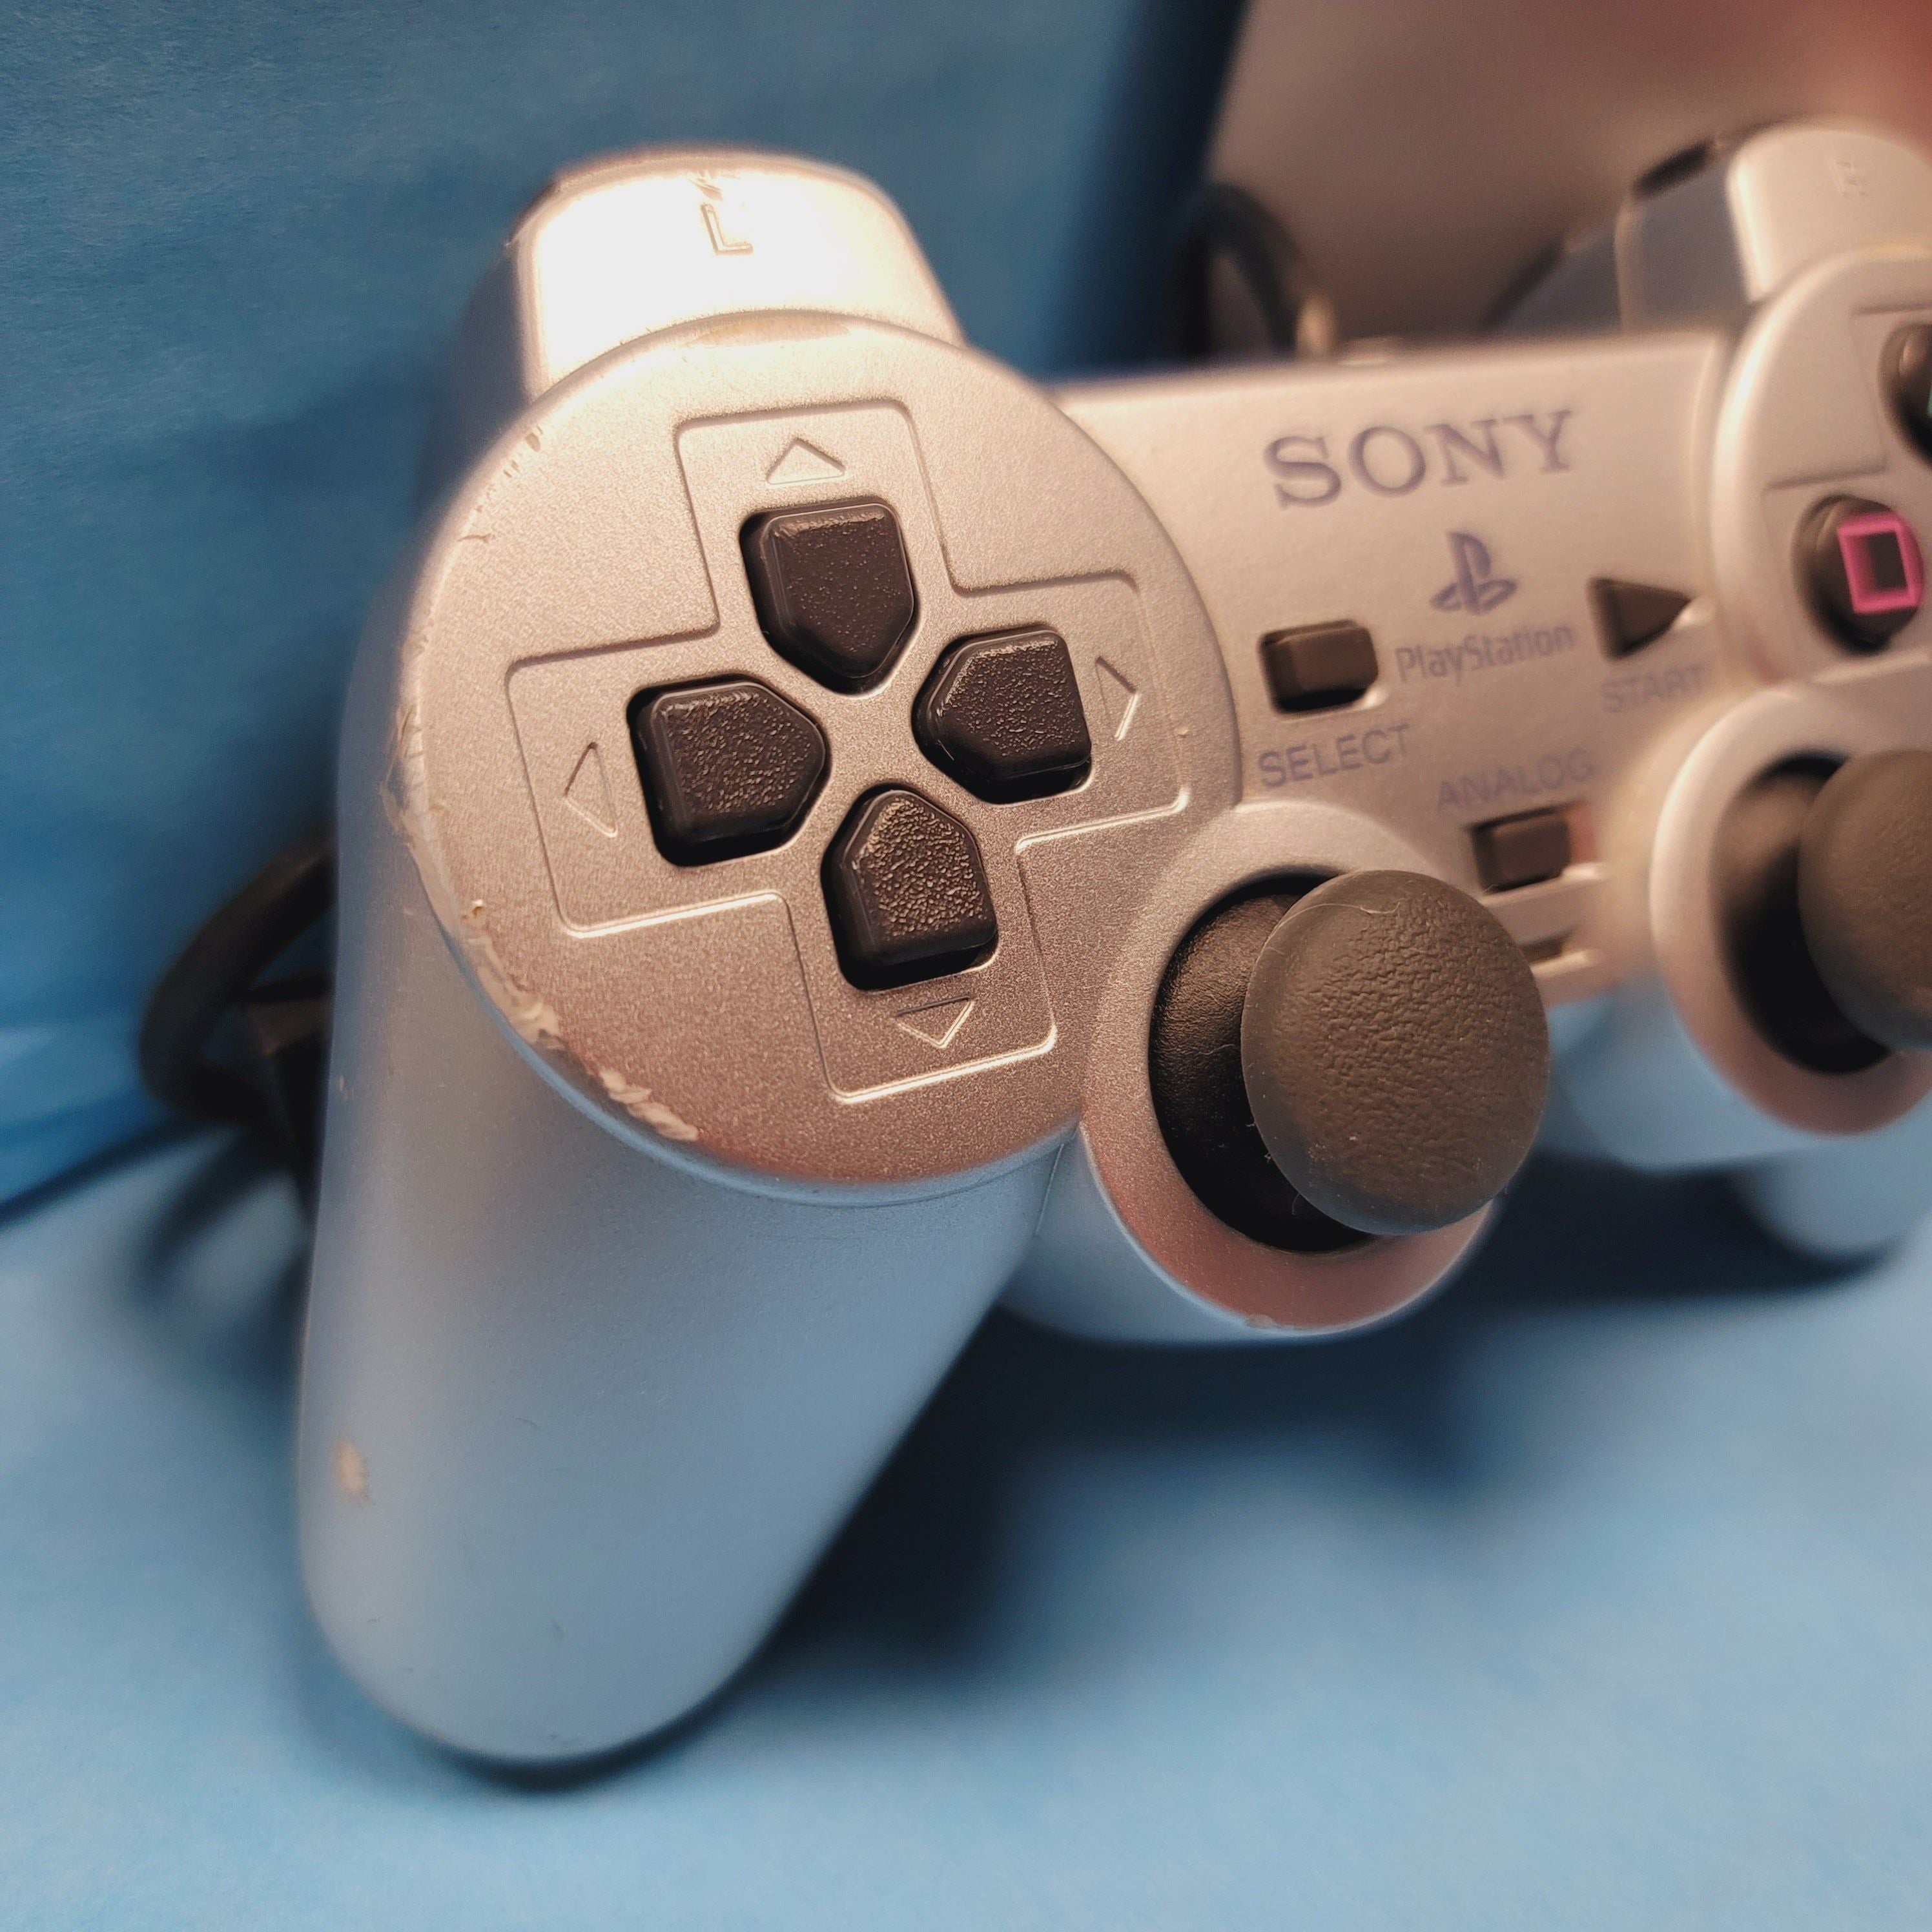 Playstation 2 Slim System - Silver Edition (Minor Cosmetic Damage)